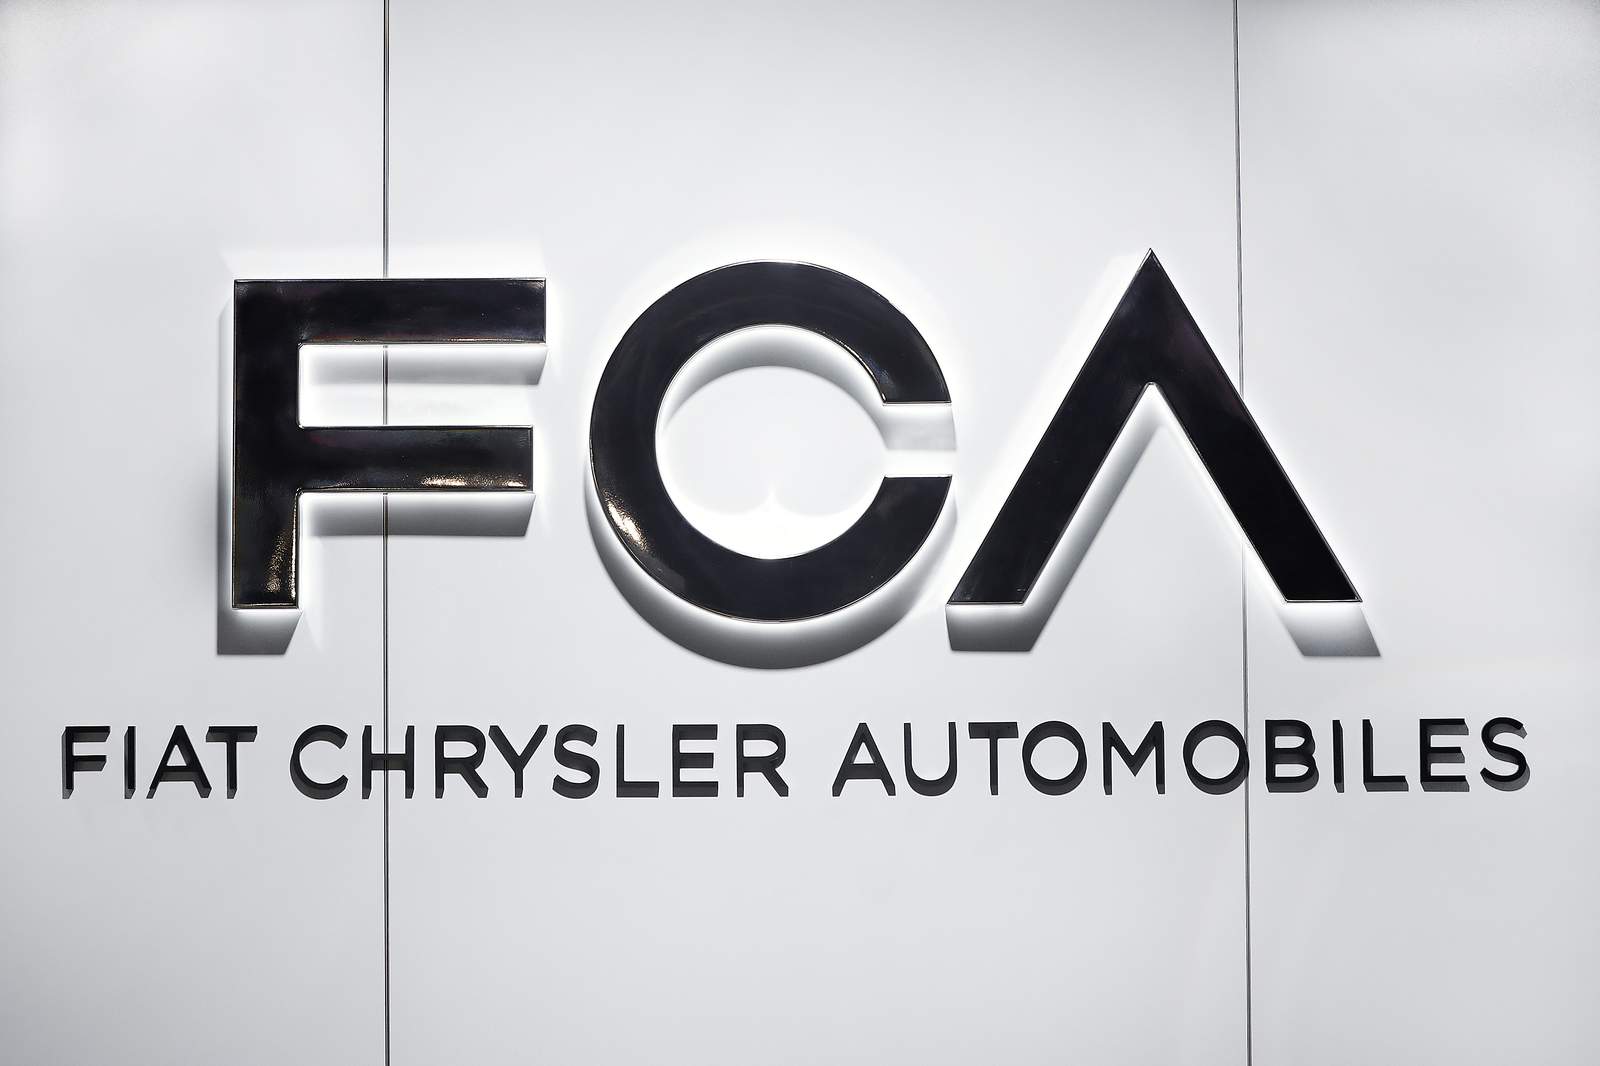 US investigates electrical fires in 2014 Chrysler minivans